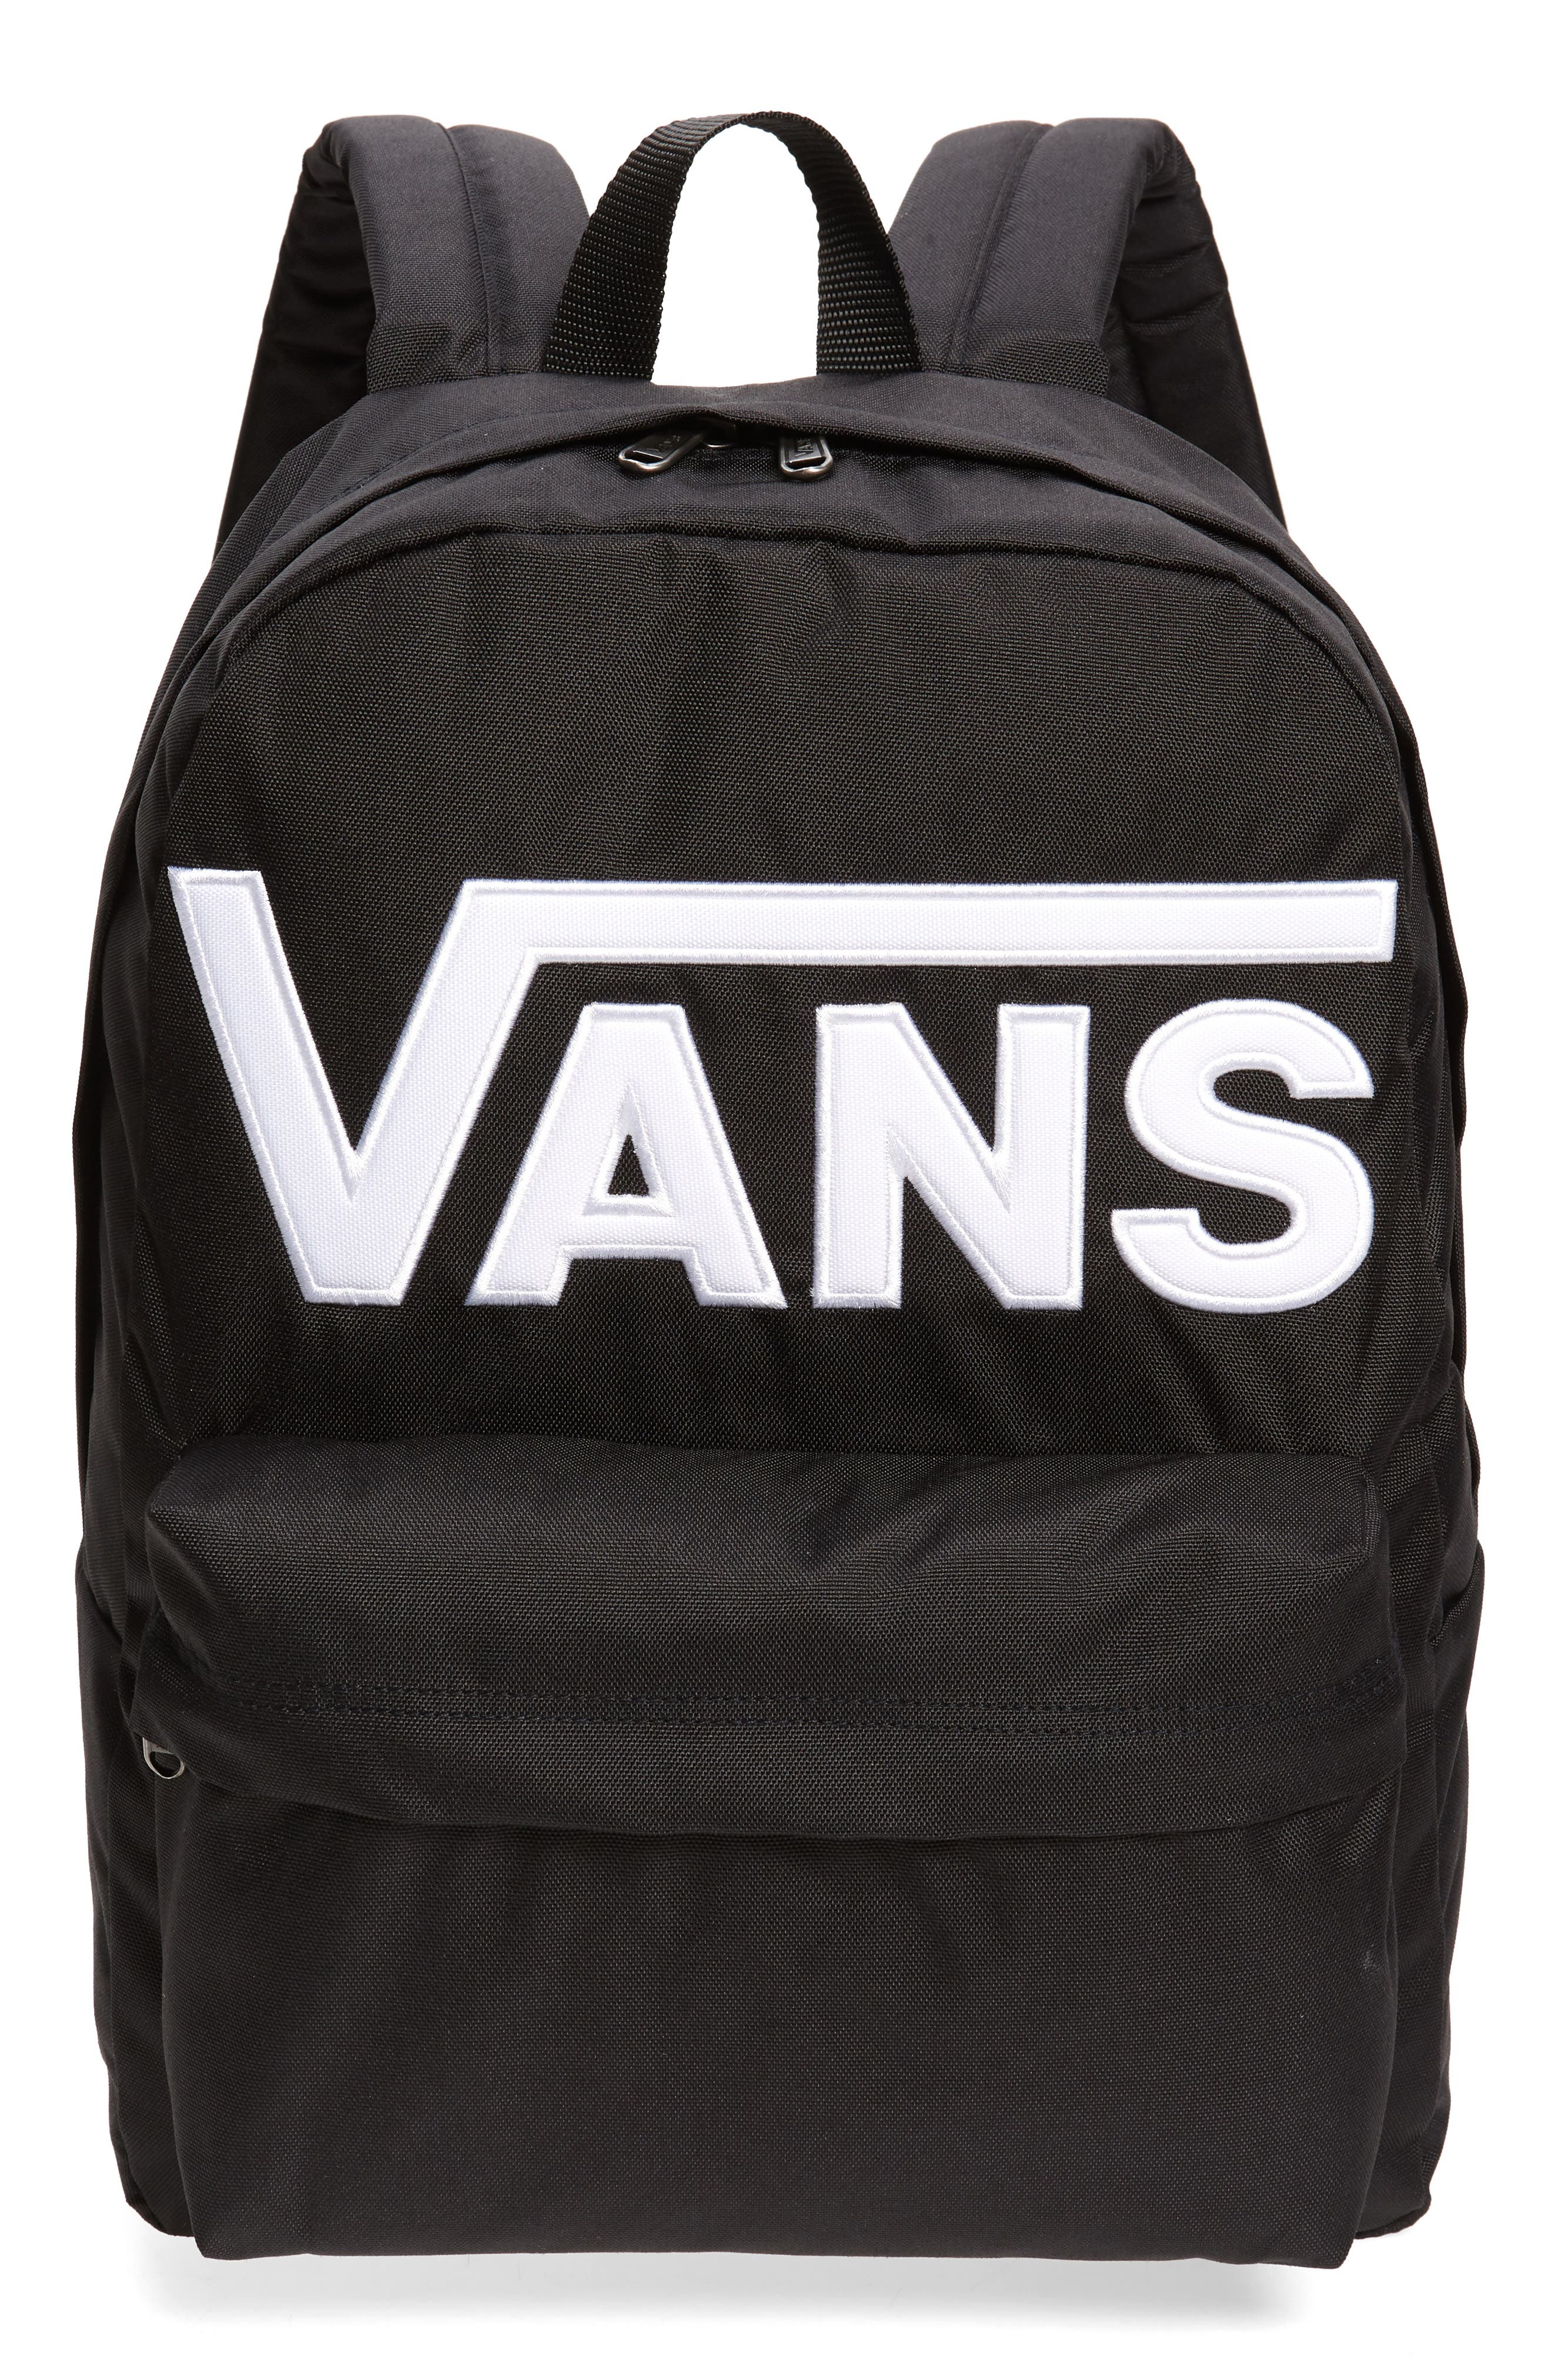 vans canvas backpack